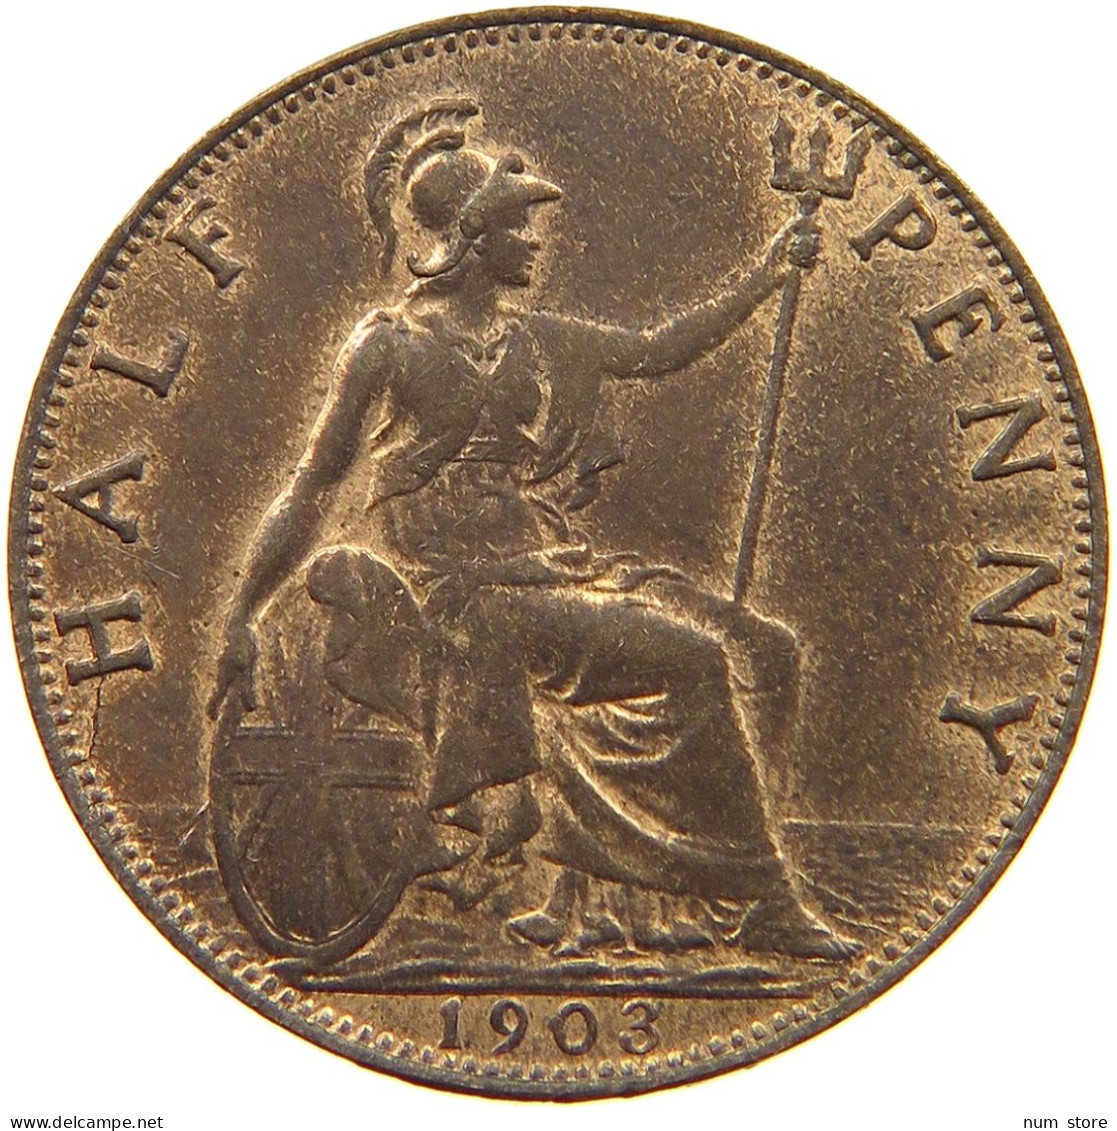 GREAT BRITAIN HALF PENNY 1903 Edward VII., 1901 - 1910 #t077 0385 - C. 1/2 Penny